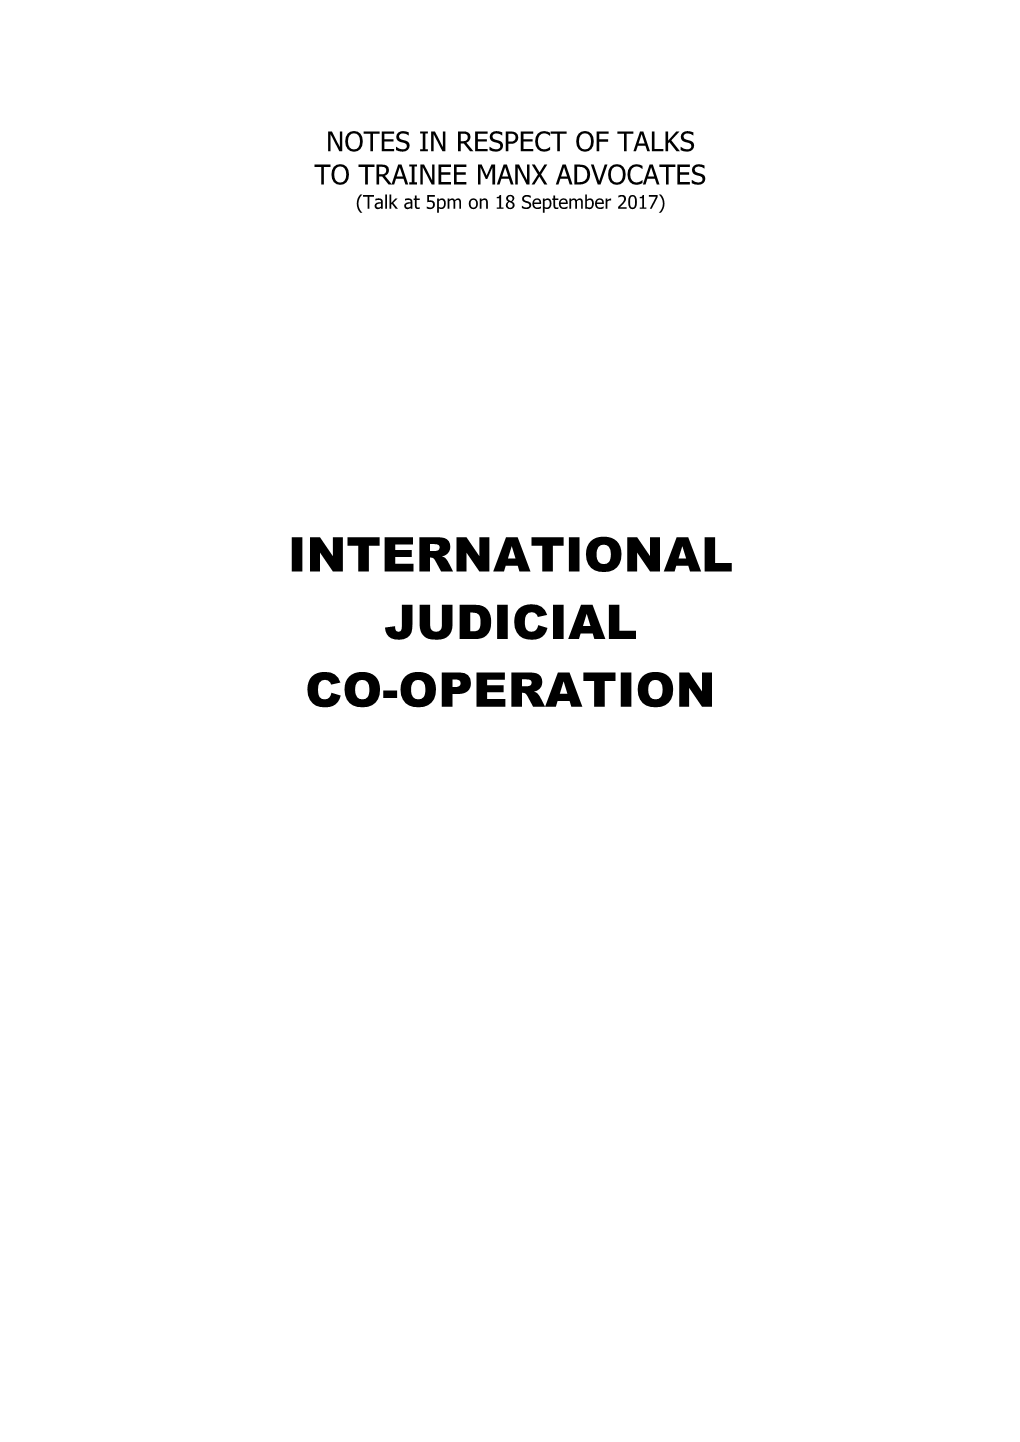 International Judicial Co-Operation